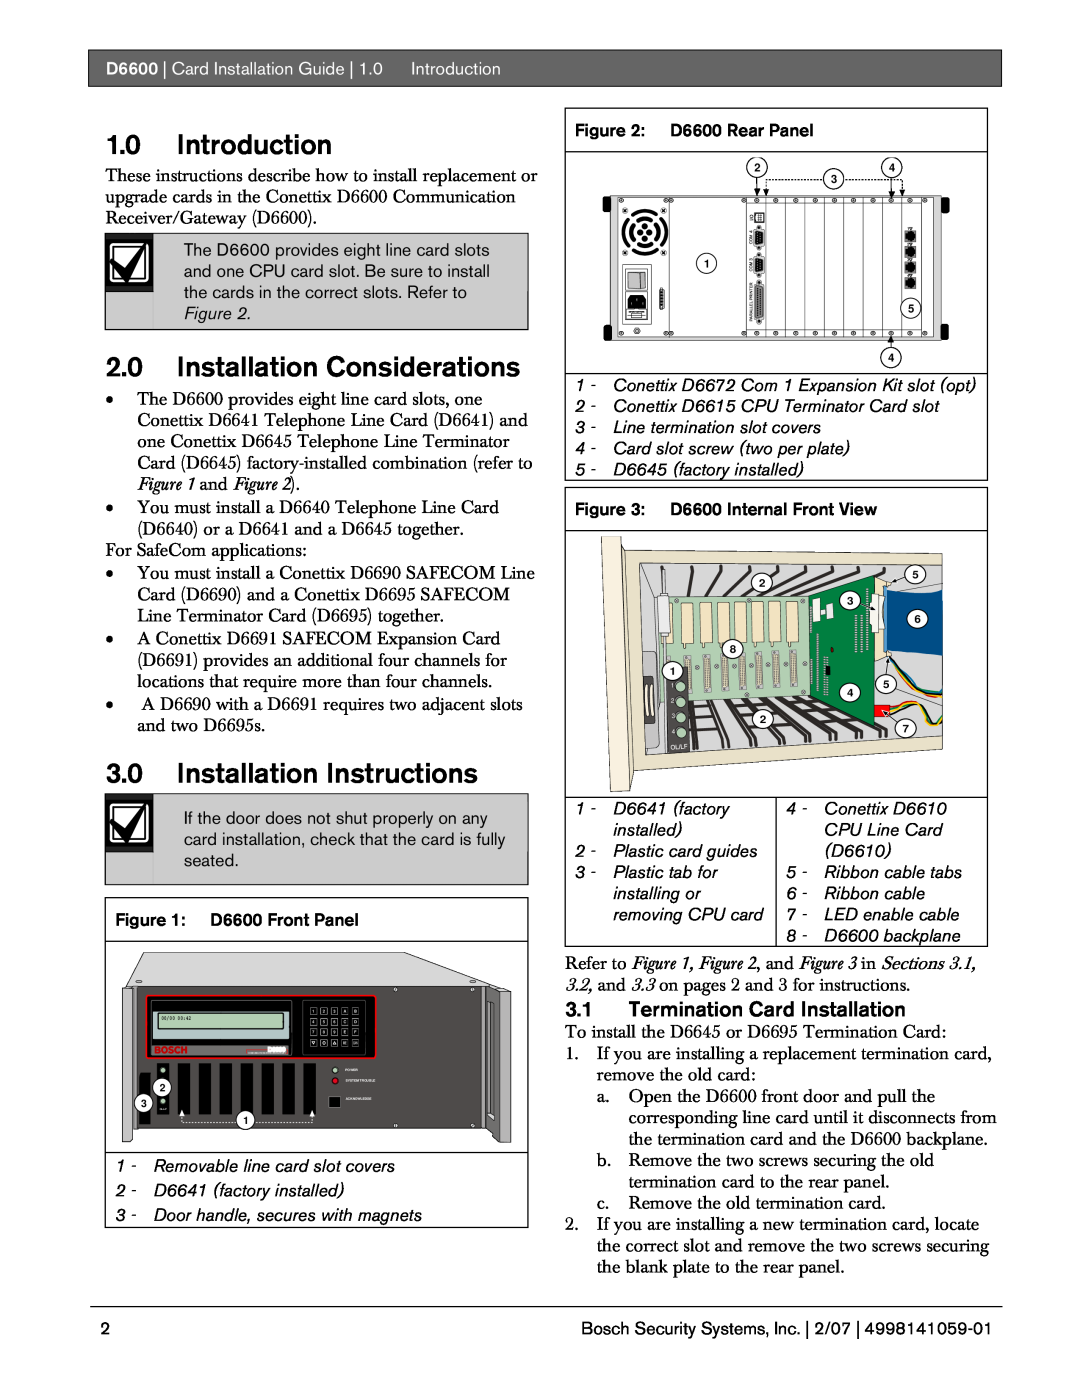 Bosch Appliances D6600 manual 3.1Termination Card Installation, 1.0Introduction, 2.0Installation Considerations 